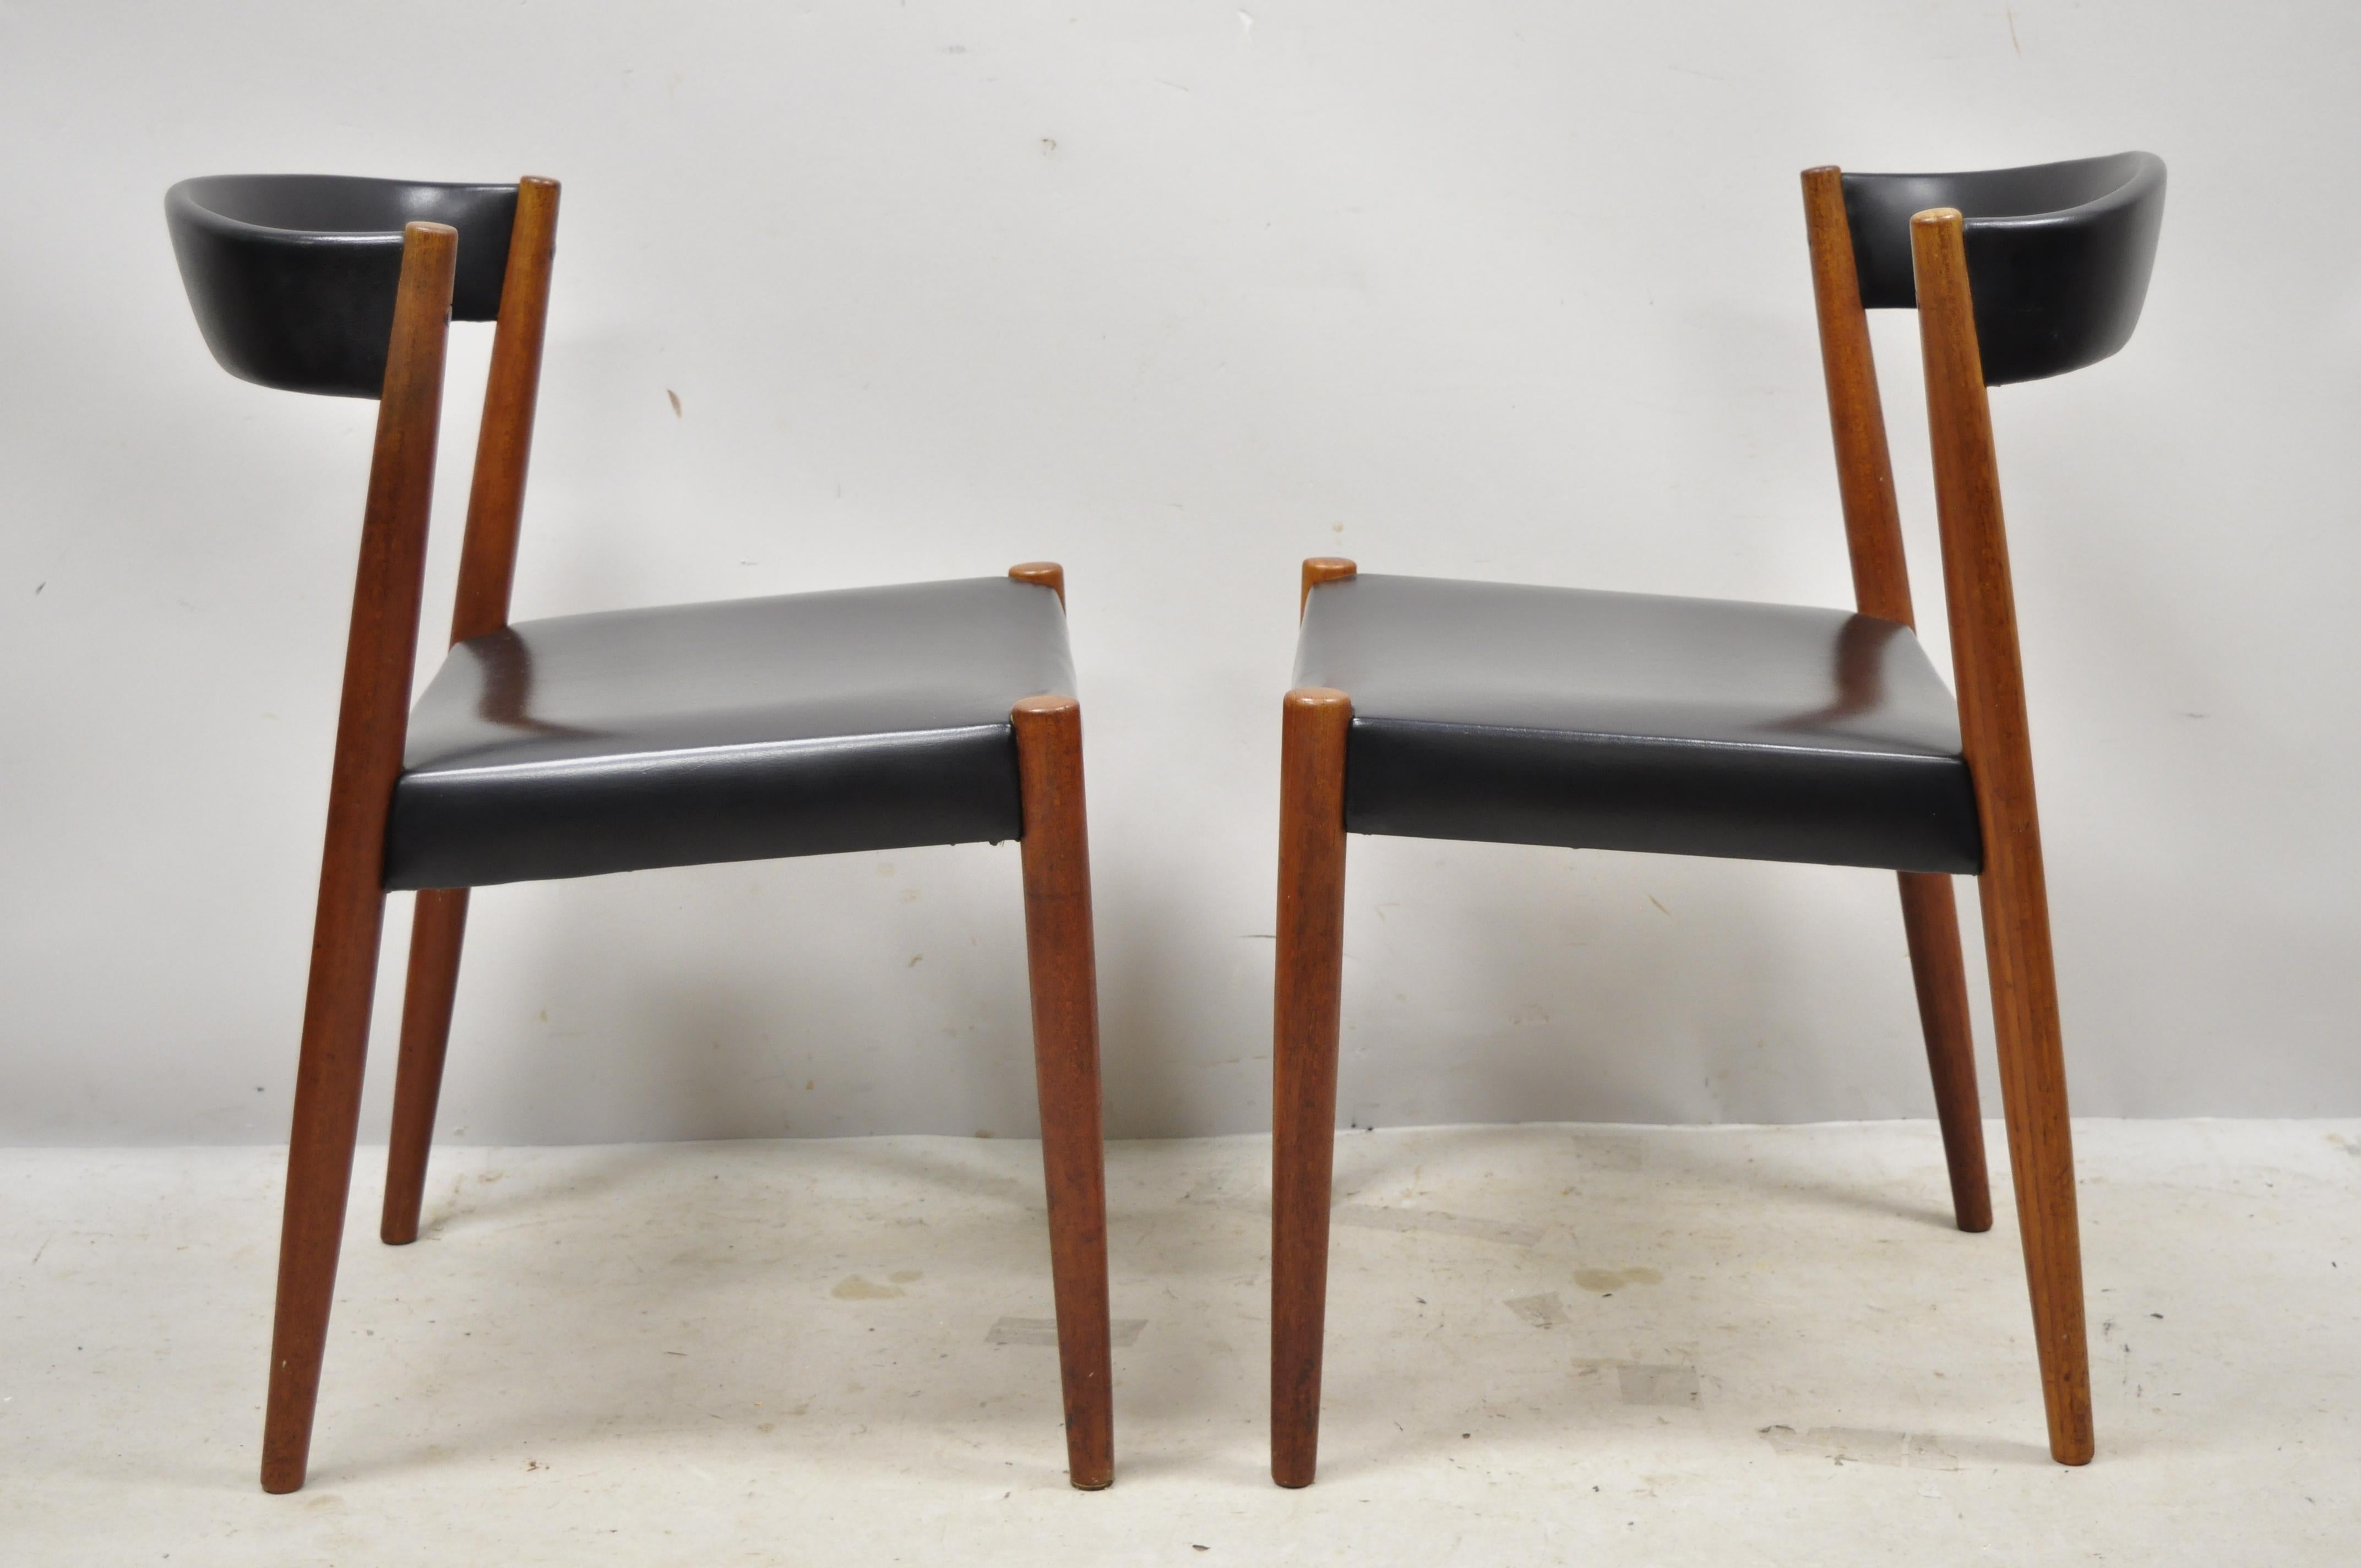 Midcentury Danish modern teak barrel back curved black vinyl dining side chairs - a pair. Item features original black upholstery, solid wood frame, beautiful wood grain, tapered legs, clean modernist lines, sleek sculptural form, circa mid-20th